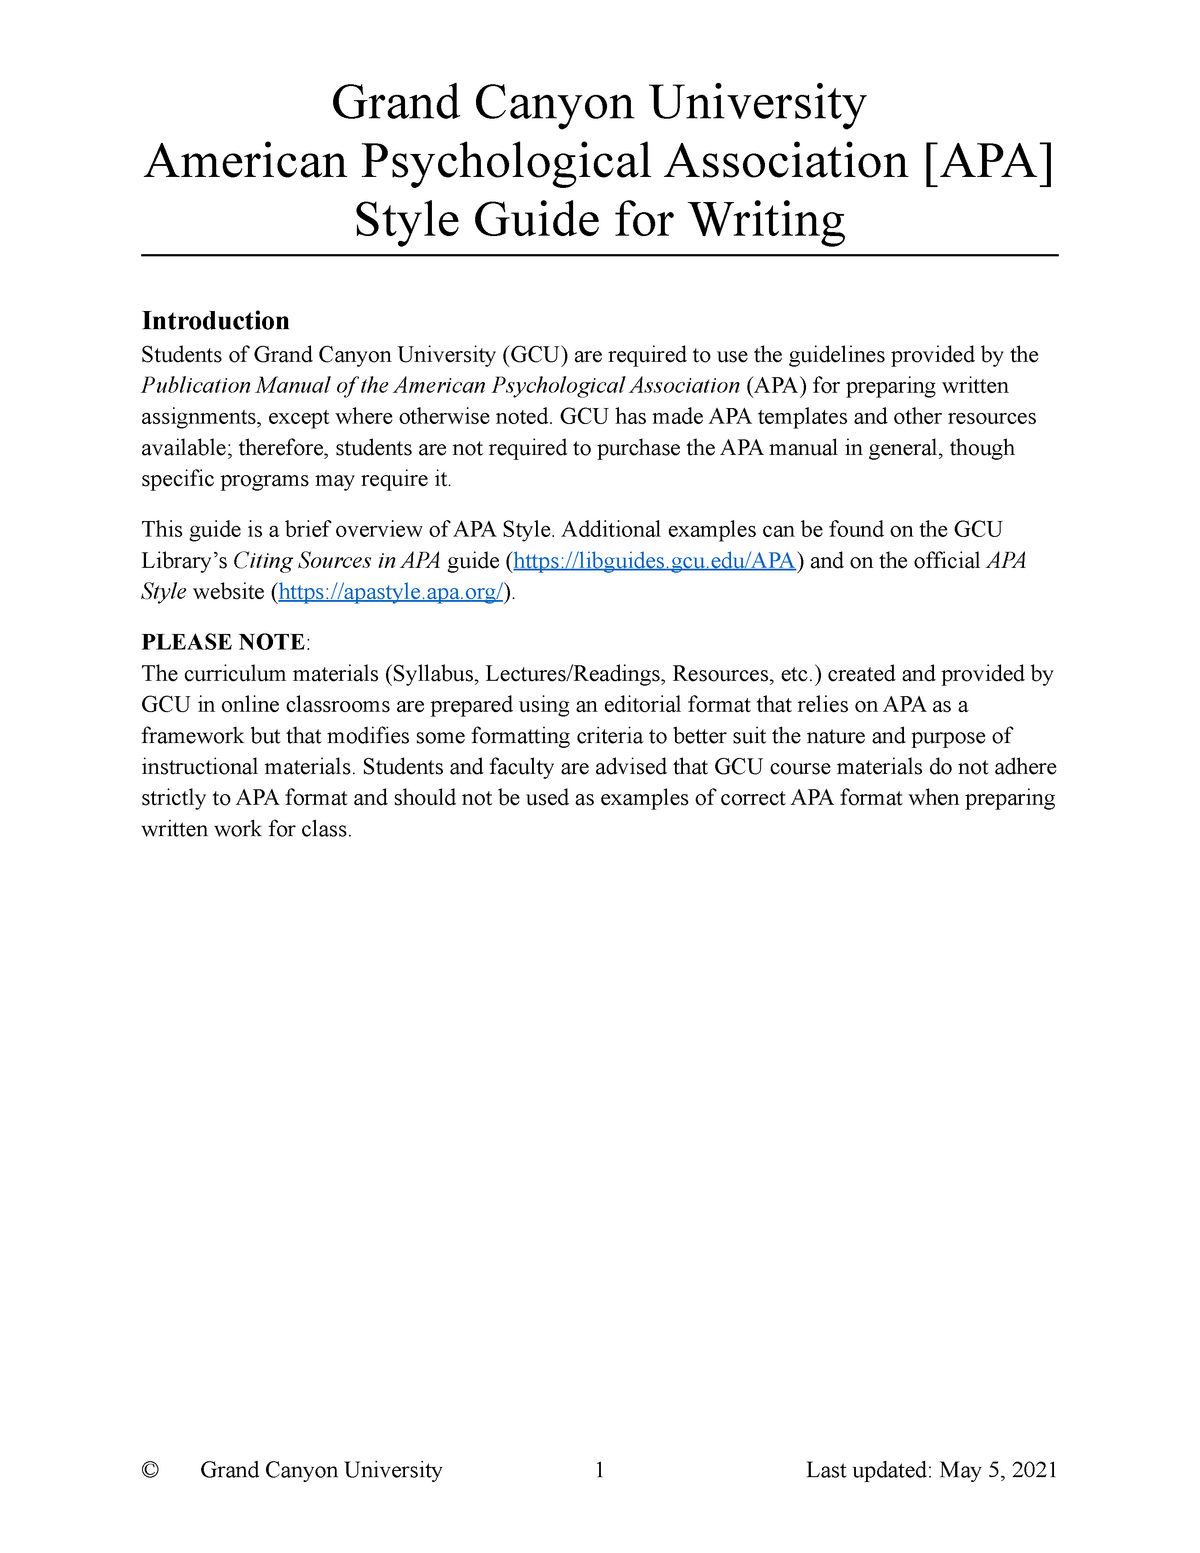 APA 7th edition style guide Grand Canyon University American